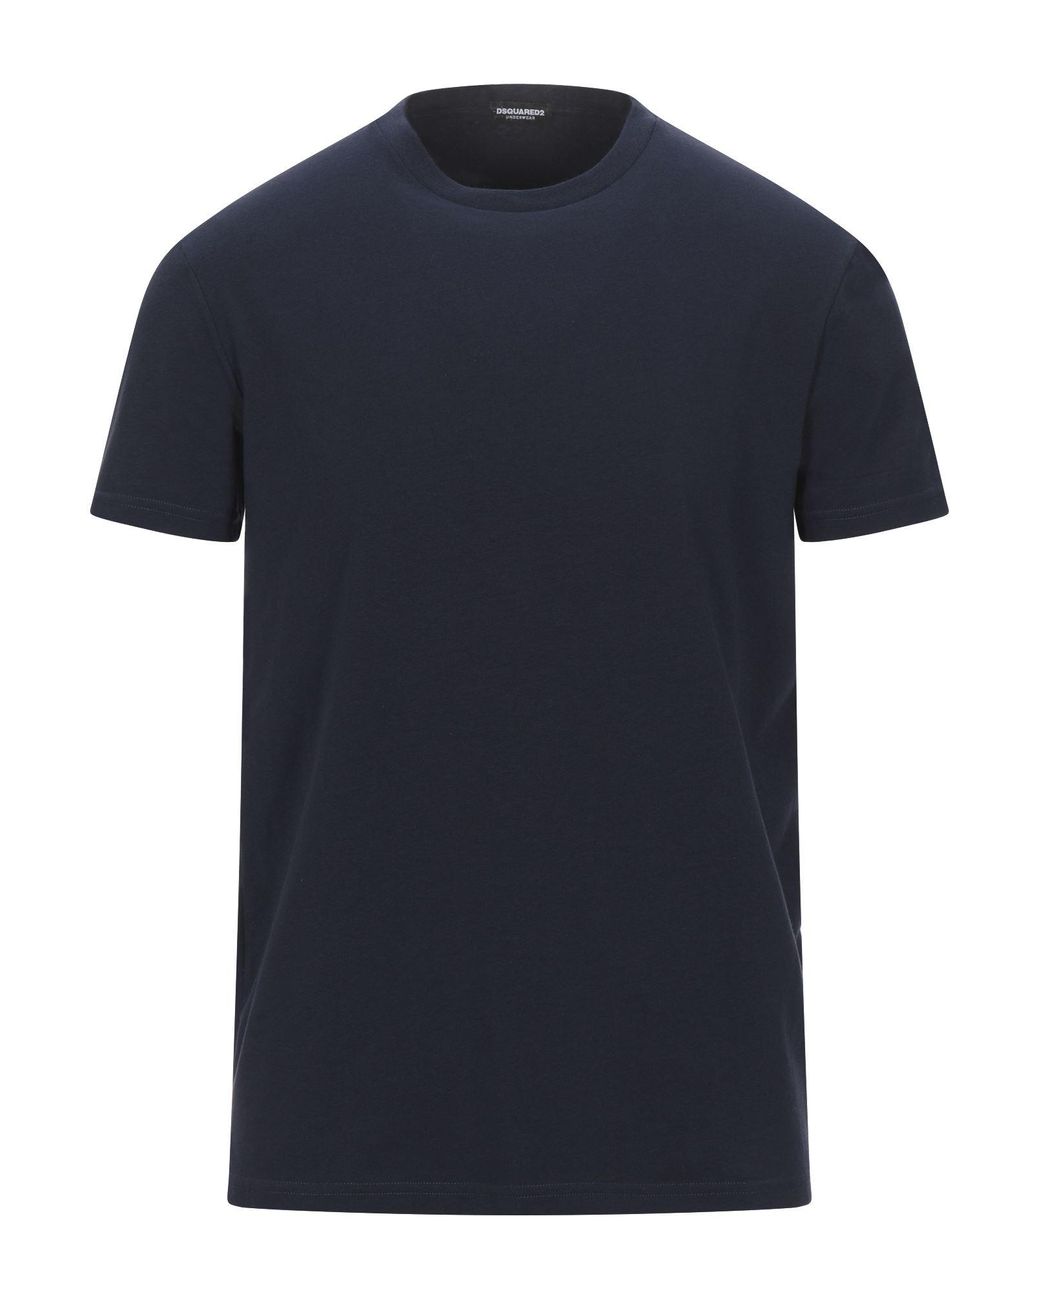 DSquared² Cotton Undershirt in Dark Blue (Blue) for Men - Lyst